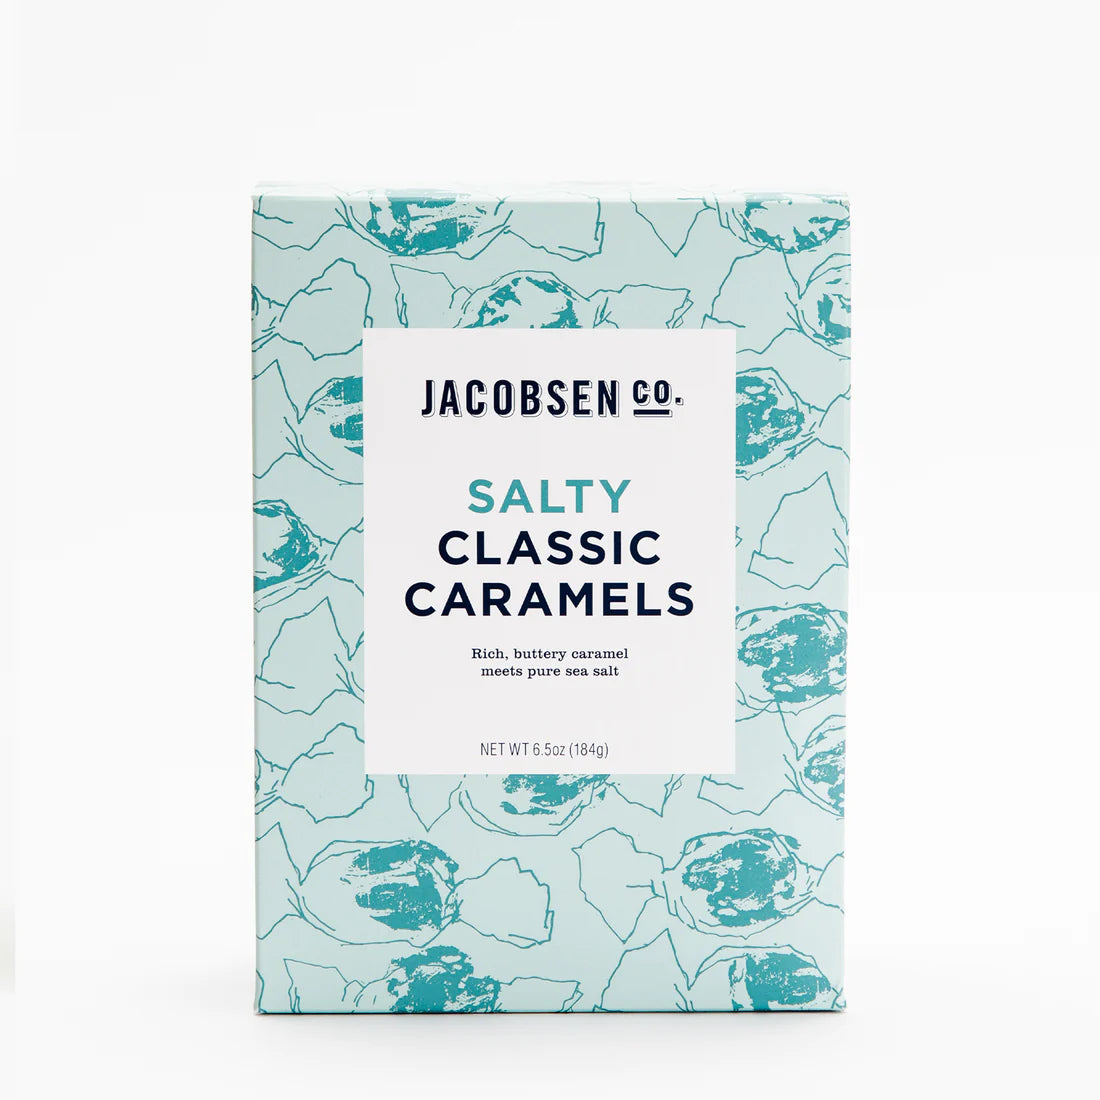 Packaging of Jacobsen Salt Co. Salty Classic Caramels